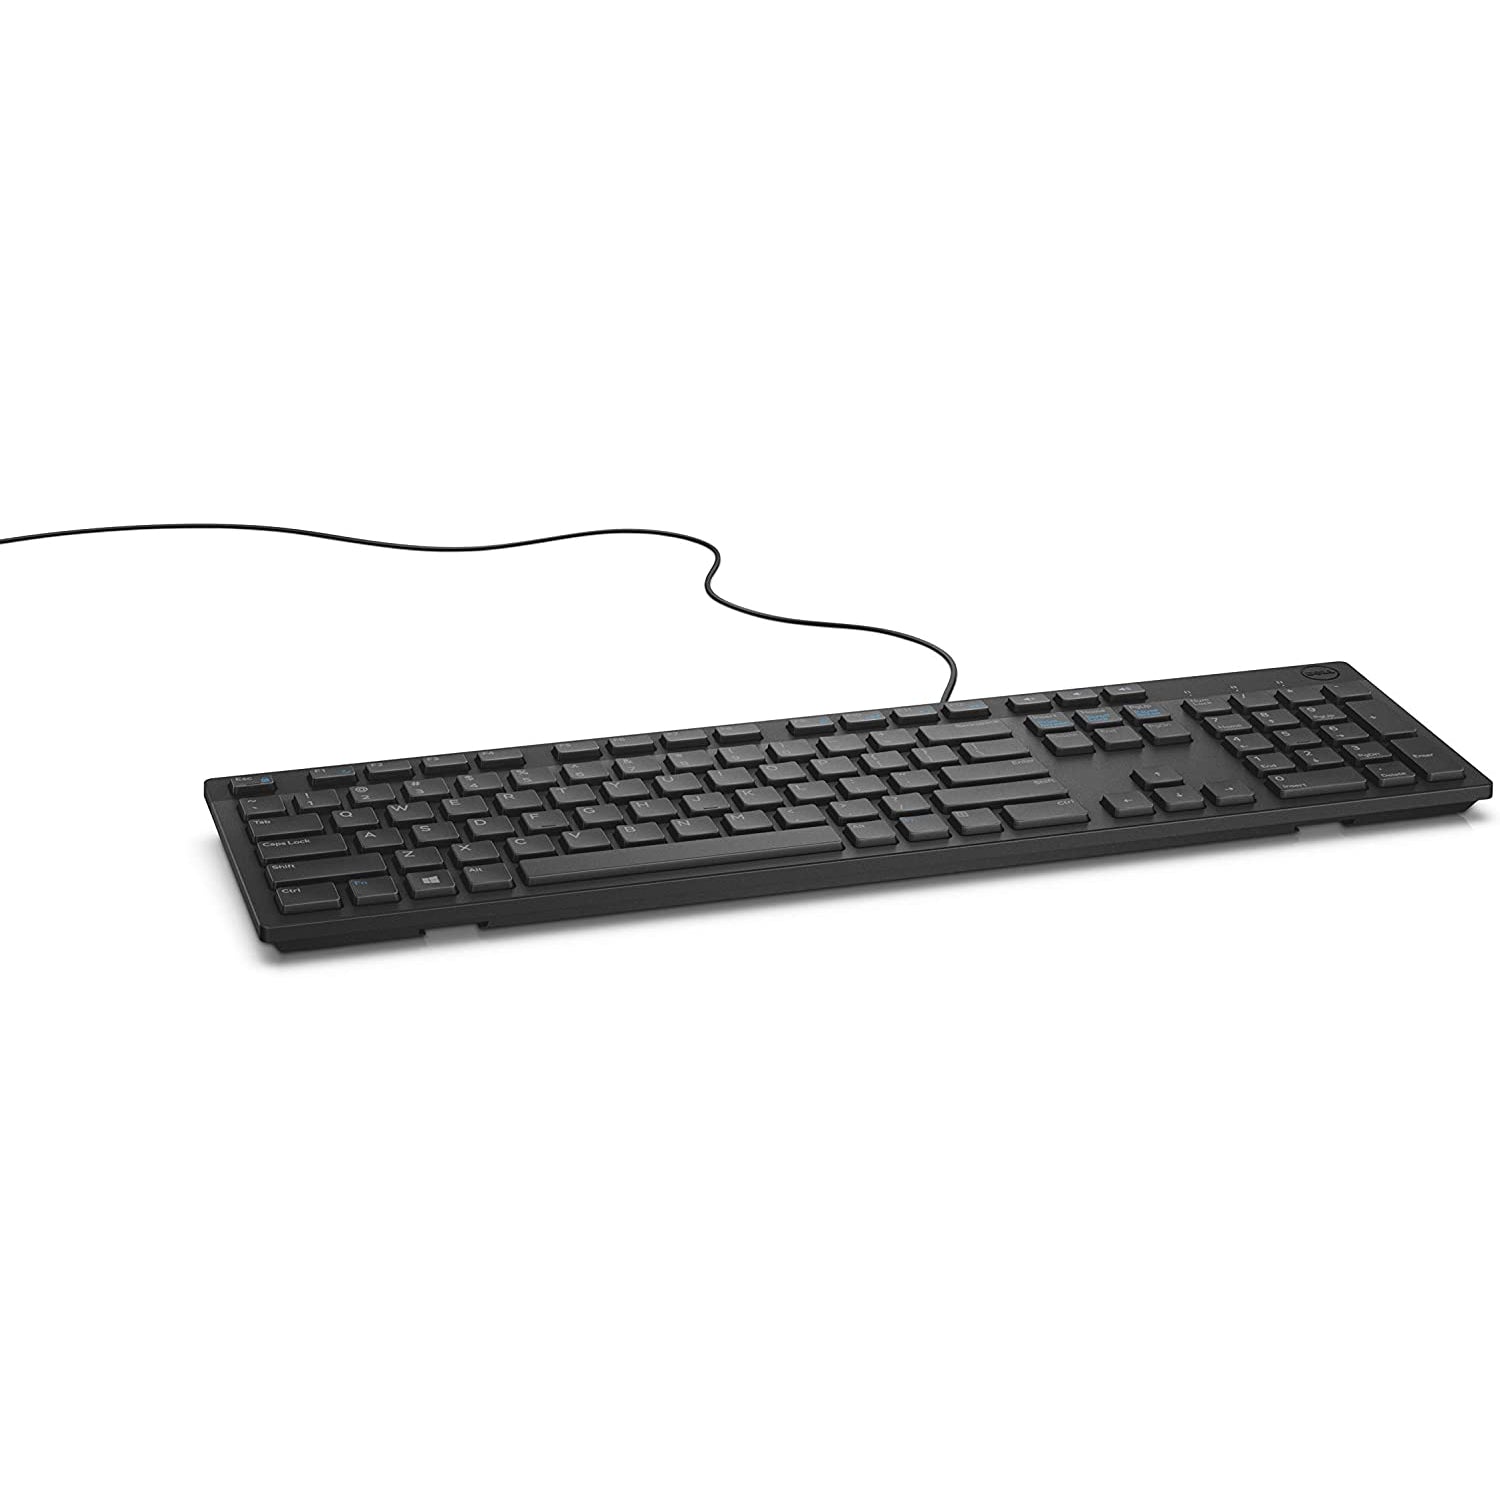 Dell Multimedia Keyboard KB216 PC / Mac Keyboard - Black - Refurbished Good